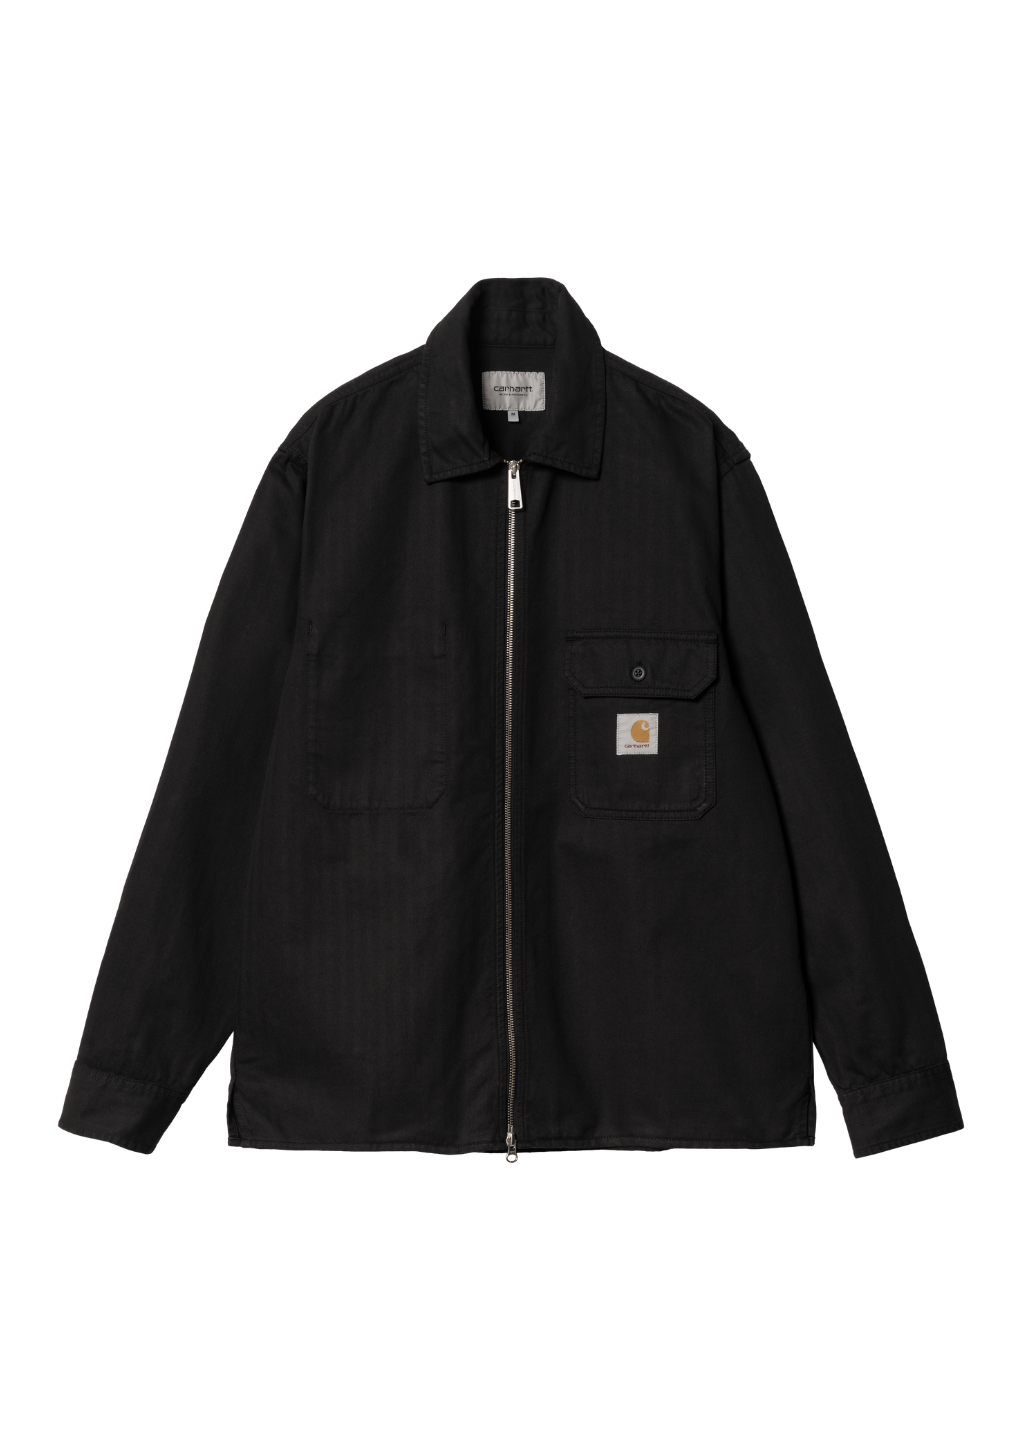 Carhartt WIP - Rainer Shirt Jacket - Black Garment Dyed - Hardpressed Print Studio Inc.